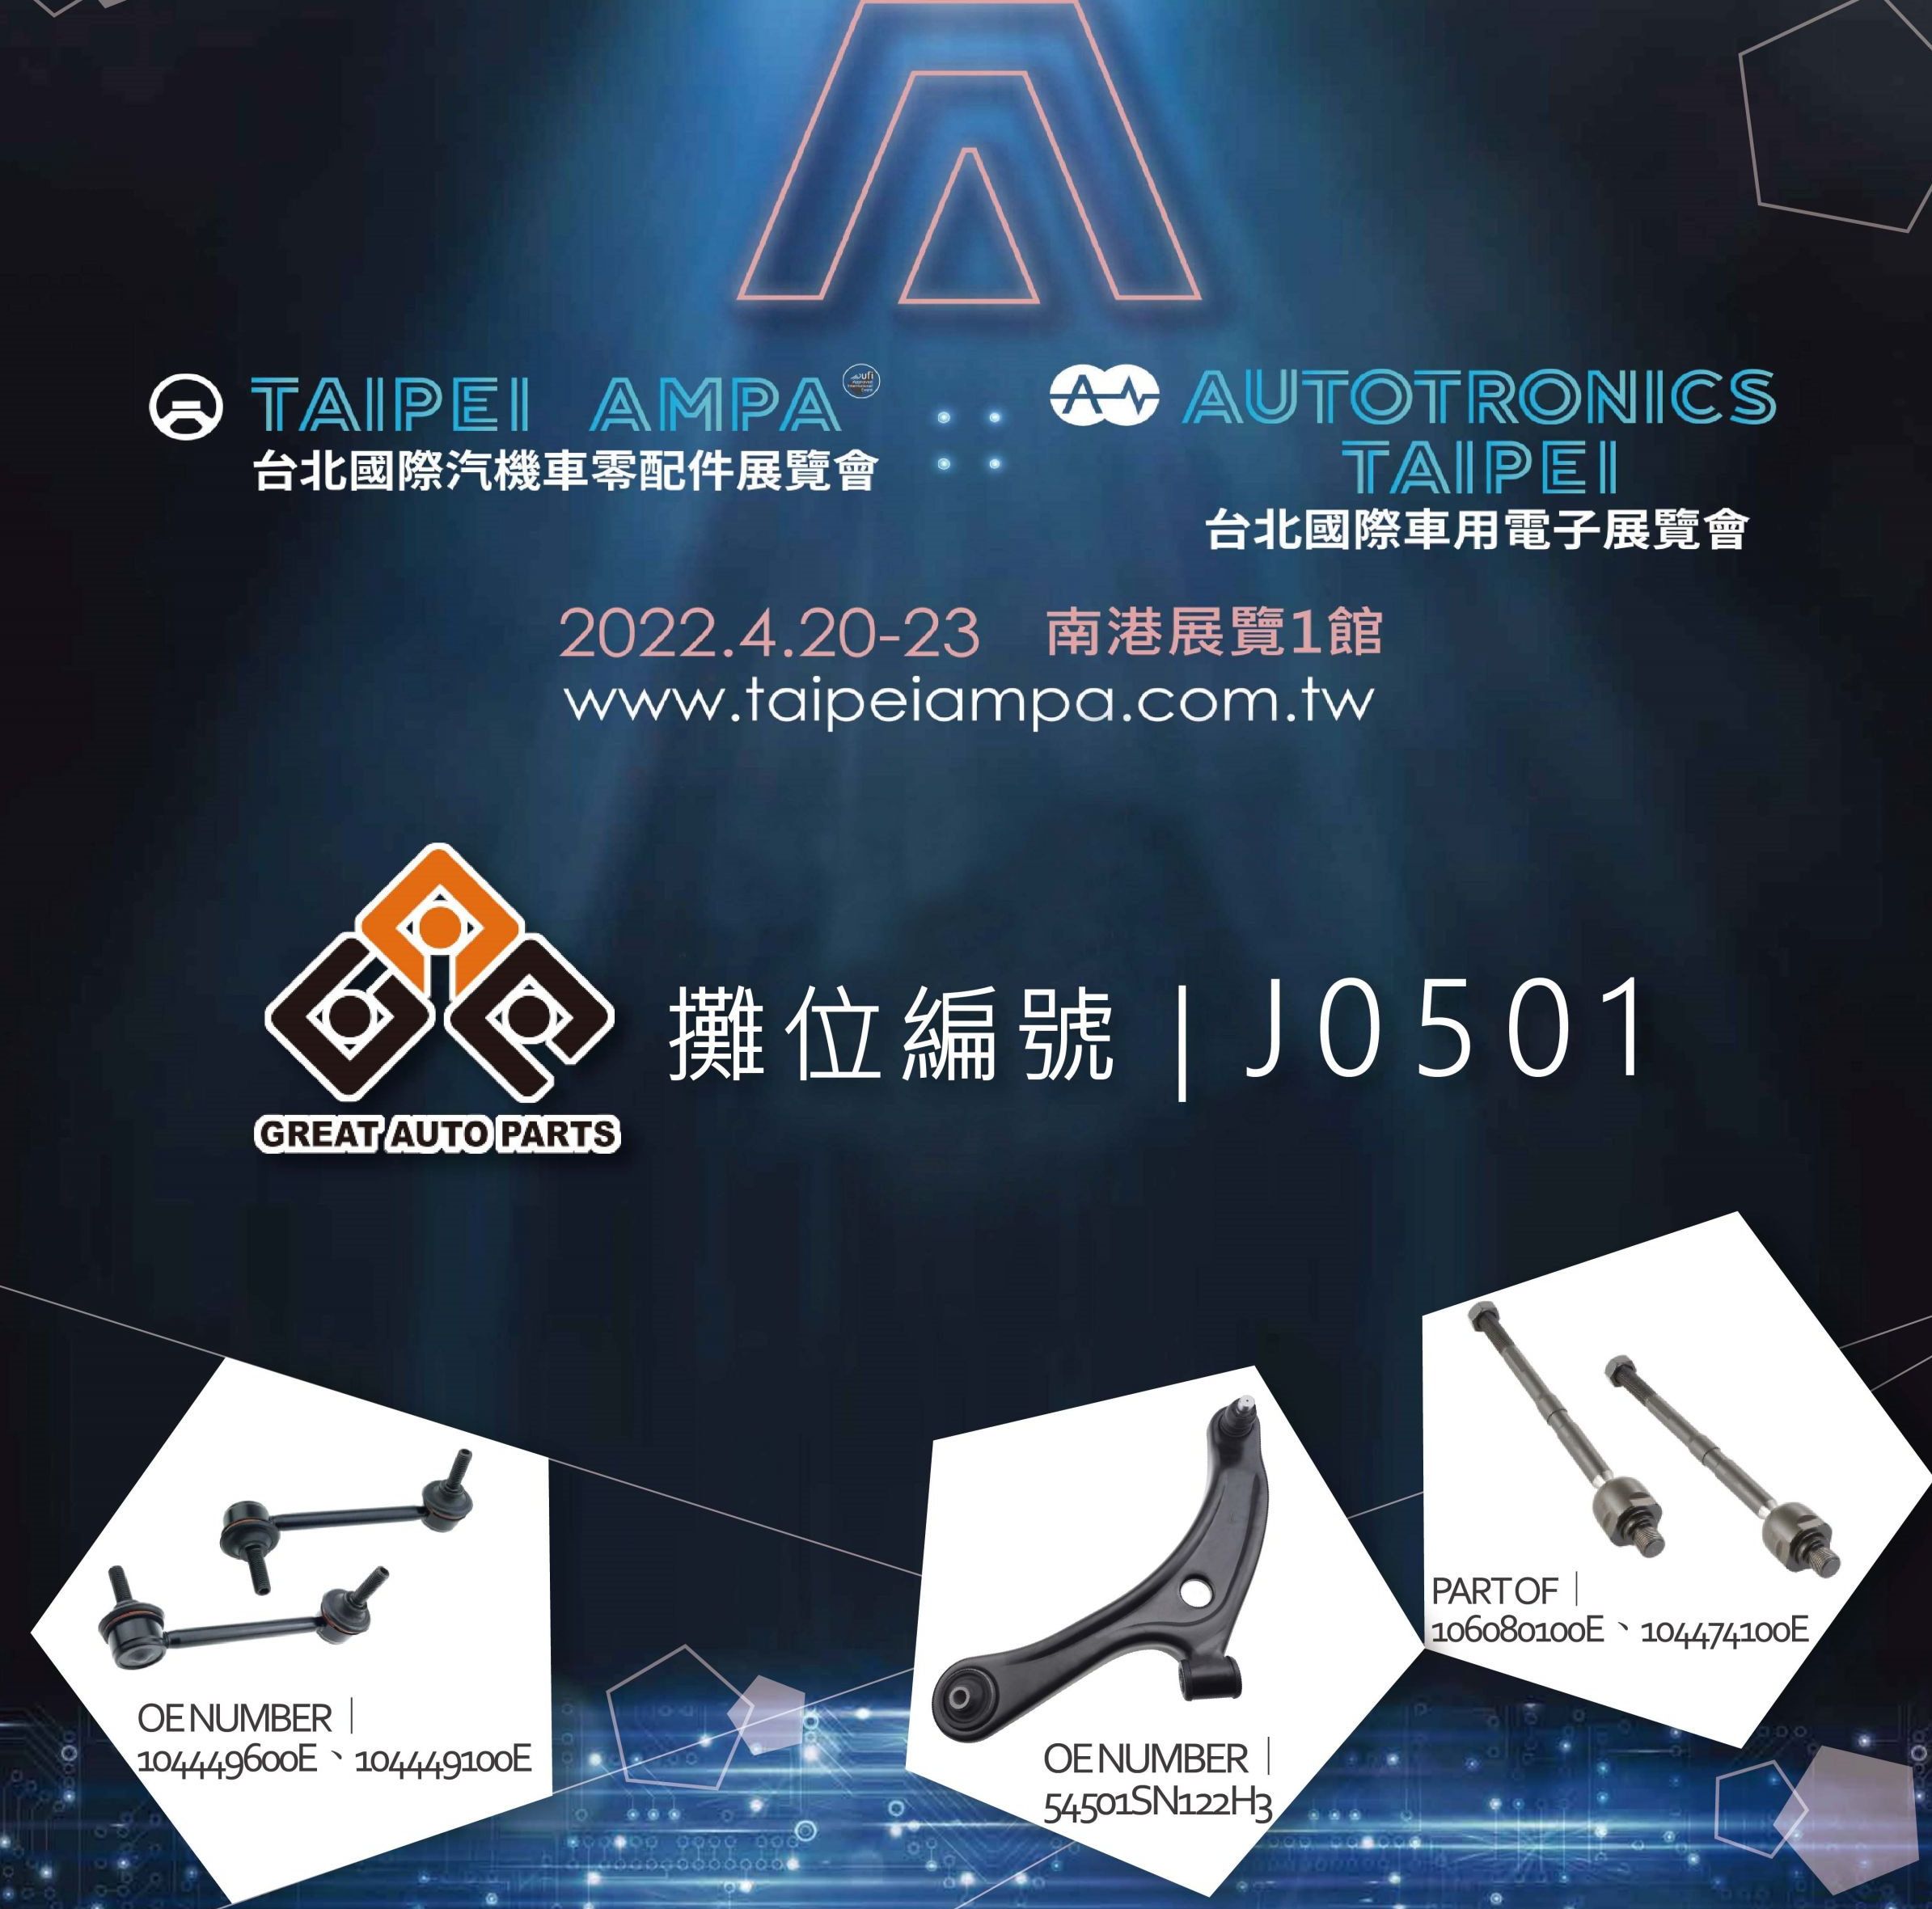 Taipei AMPA 2022 (Grande Autopeças)